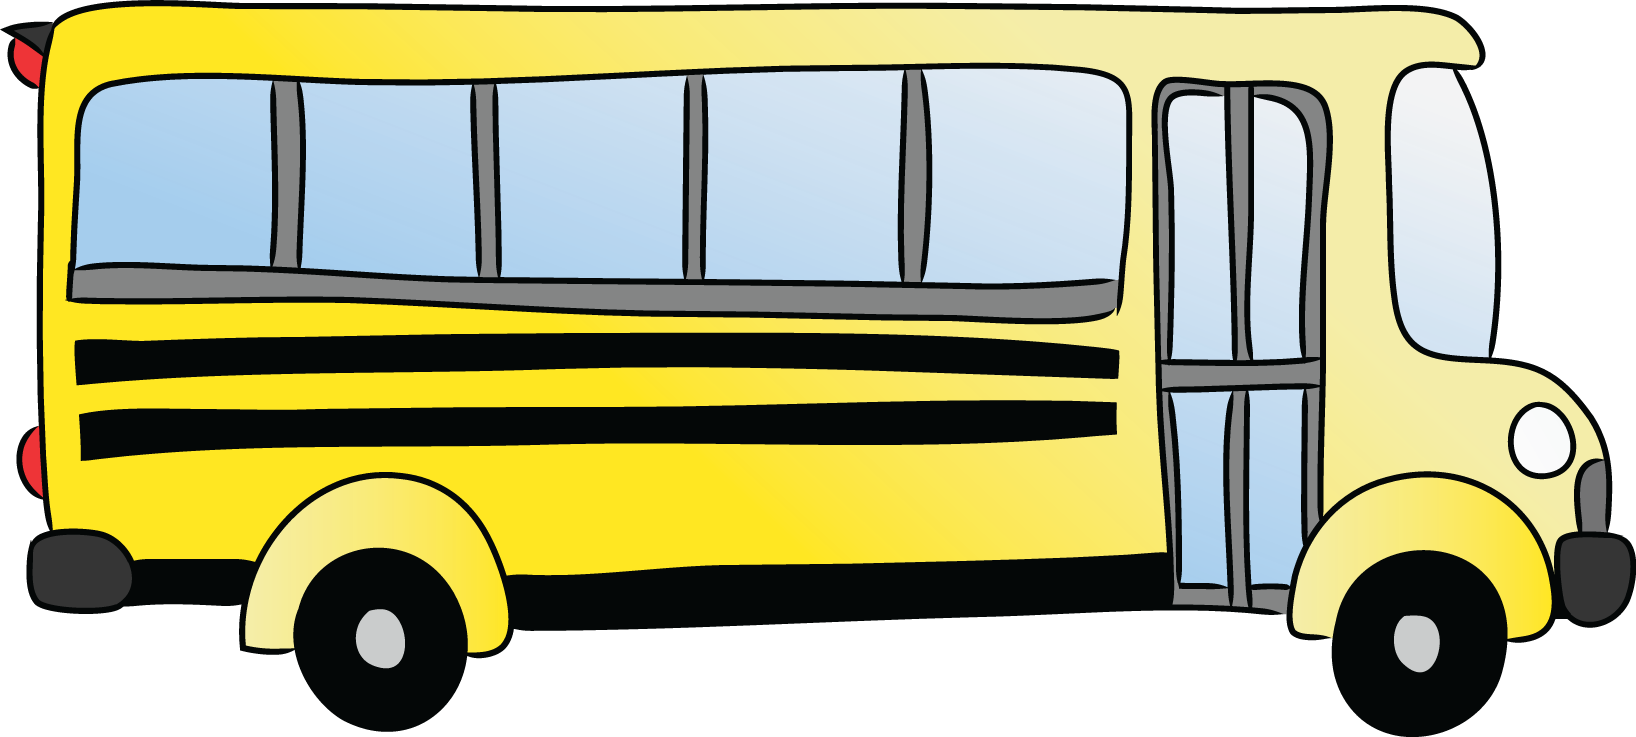 Cartoon School Buses - Cliparts.co